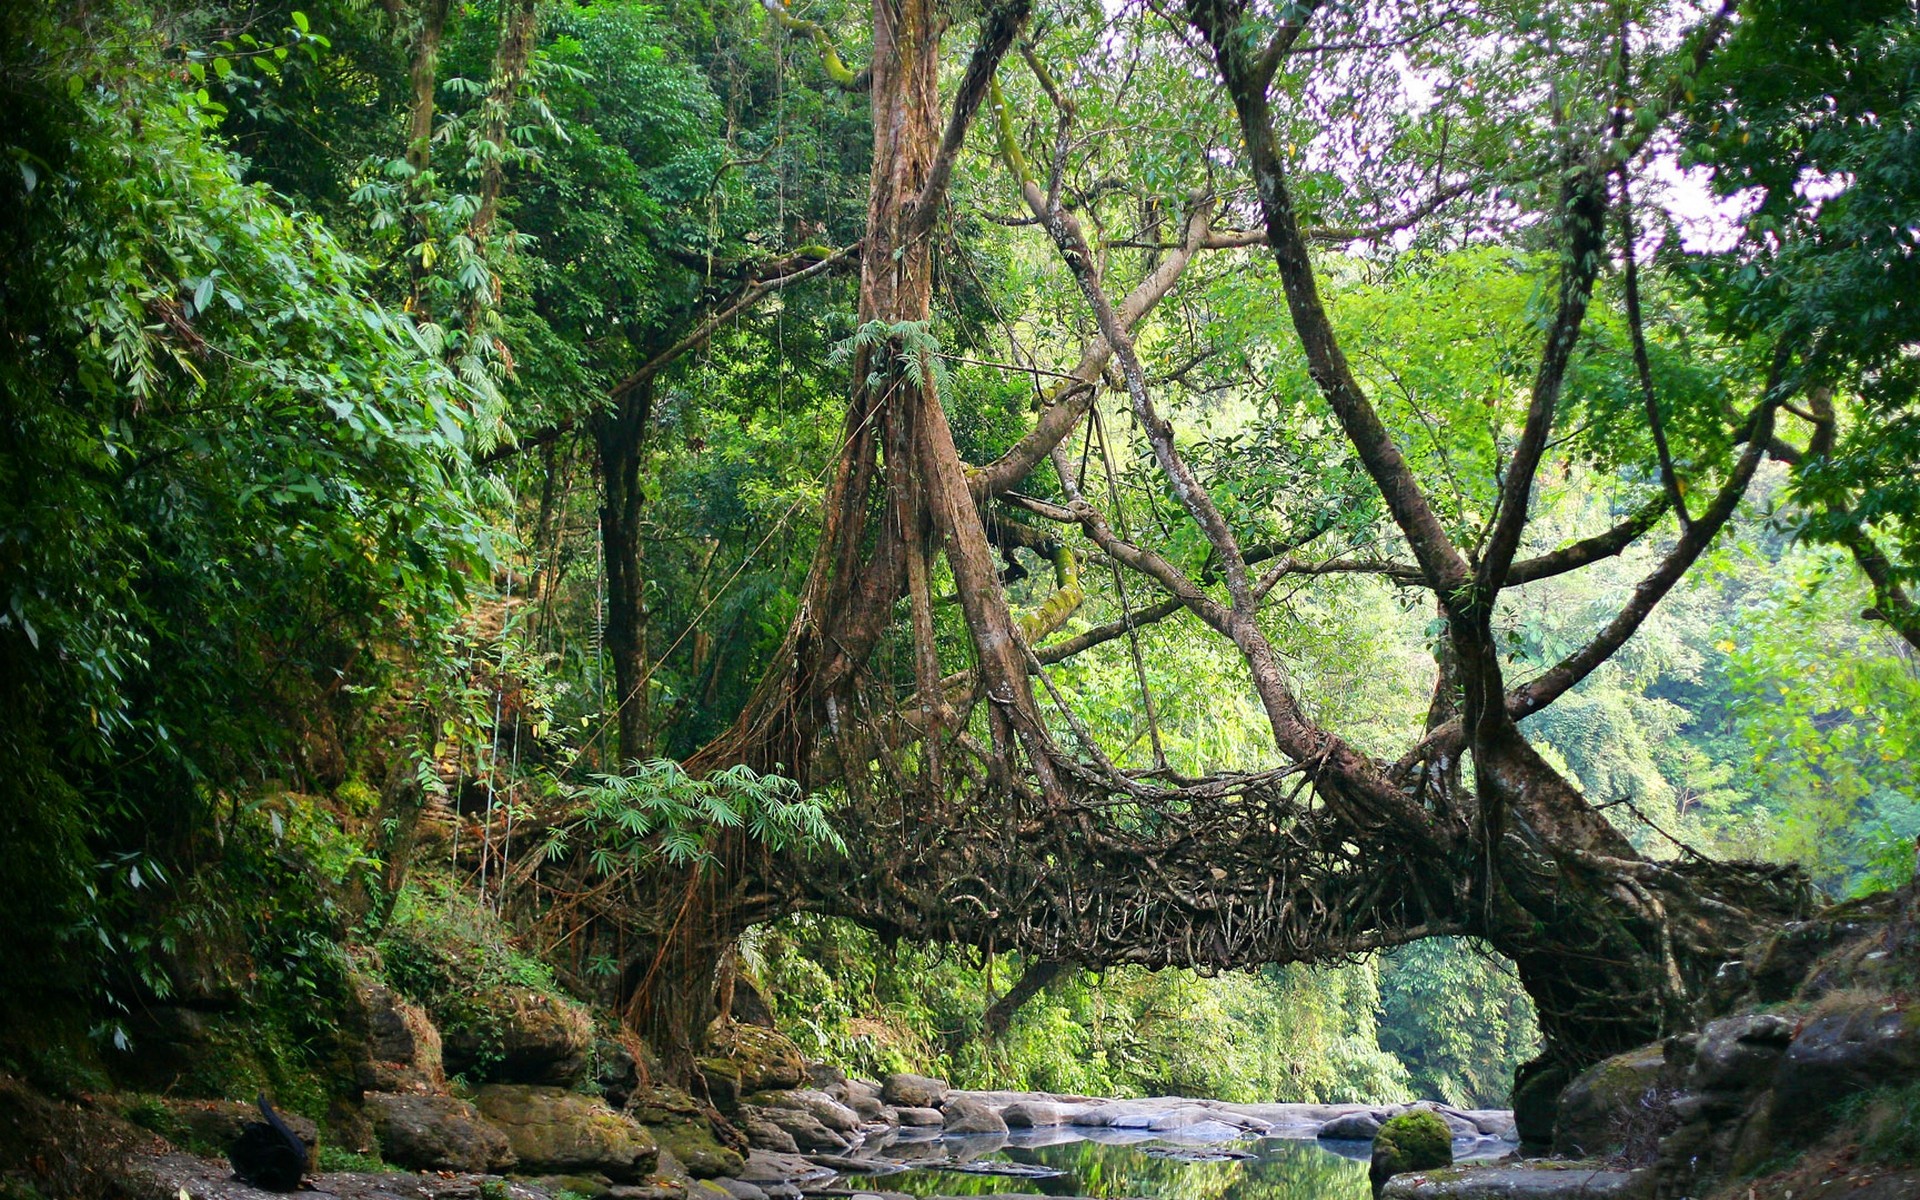 General 1920x1200 nature India bridge jungle roots trees Root creeks plants outdoors